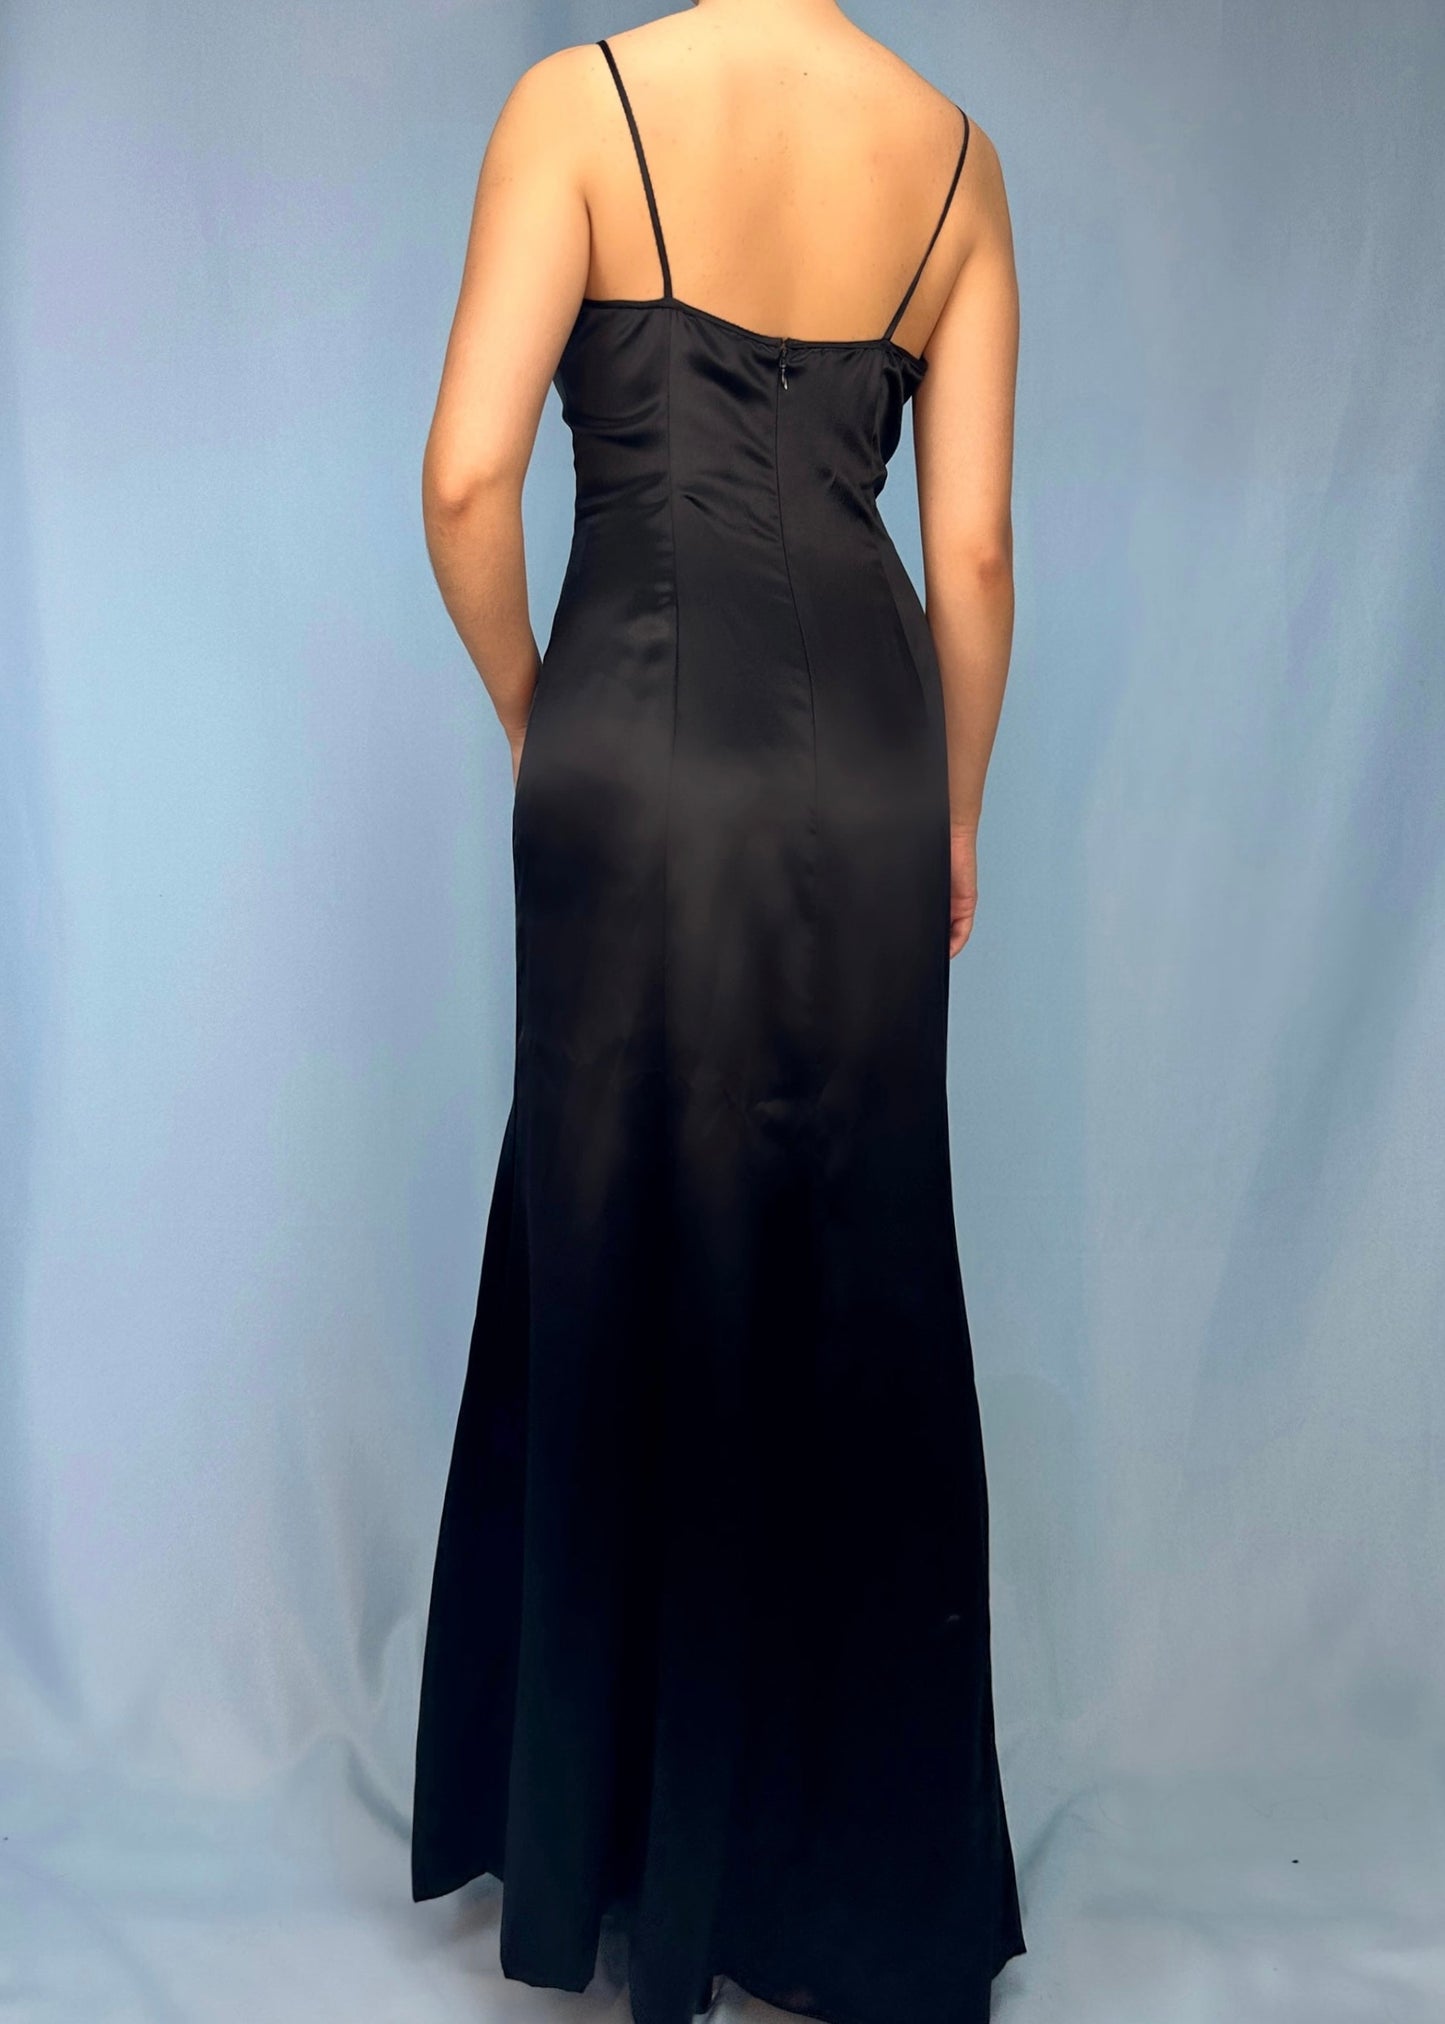 Chanel Fall 1995 Black Silk Gown Dress